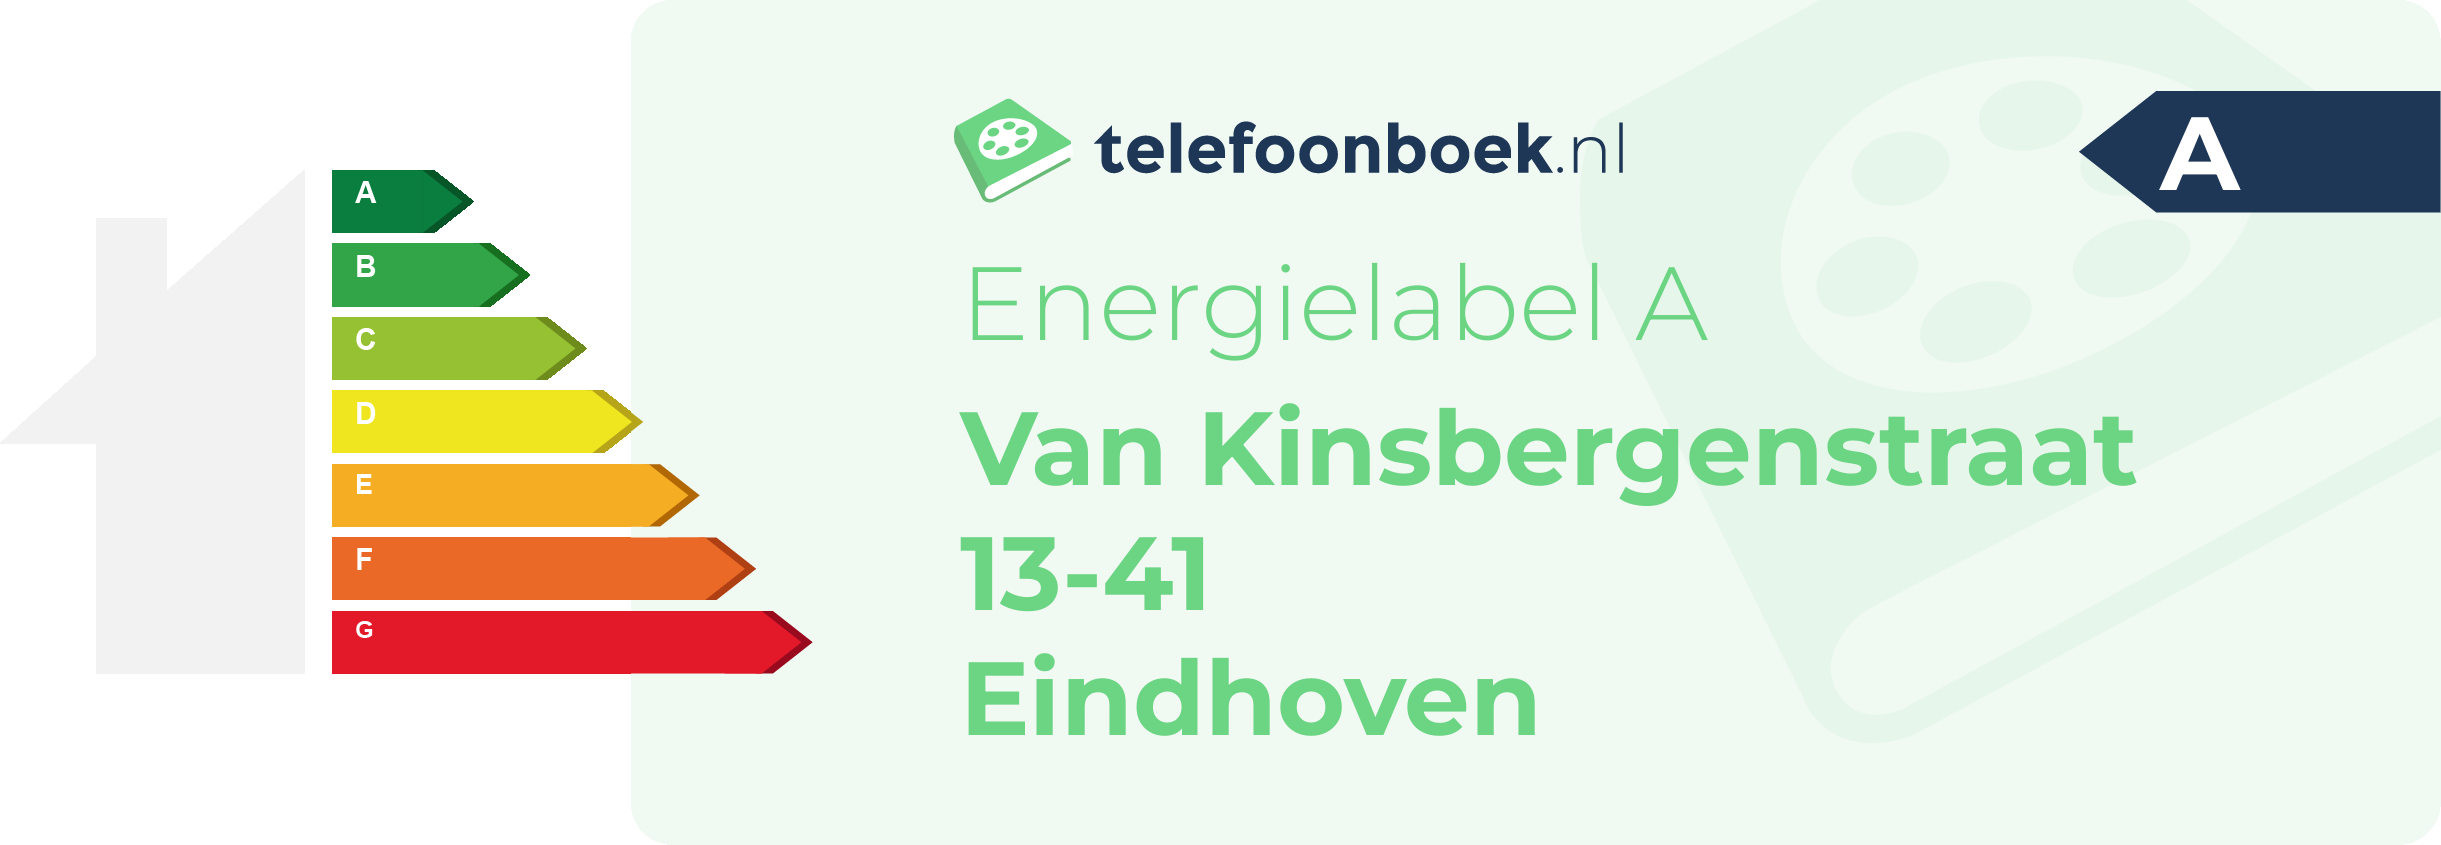 Energielabel Van Kinsbergenstraat 13-41 Eindhoven